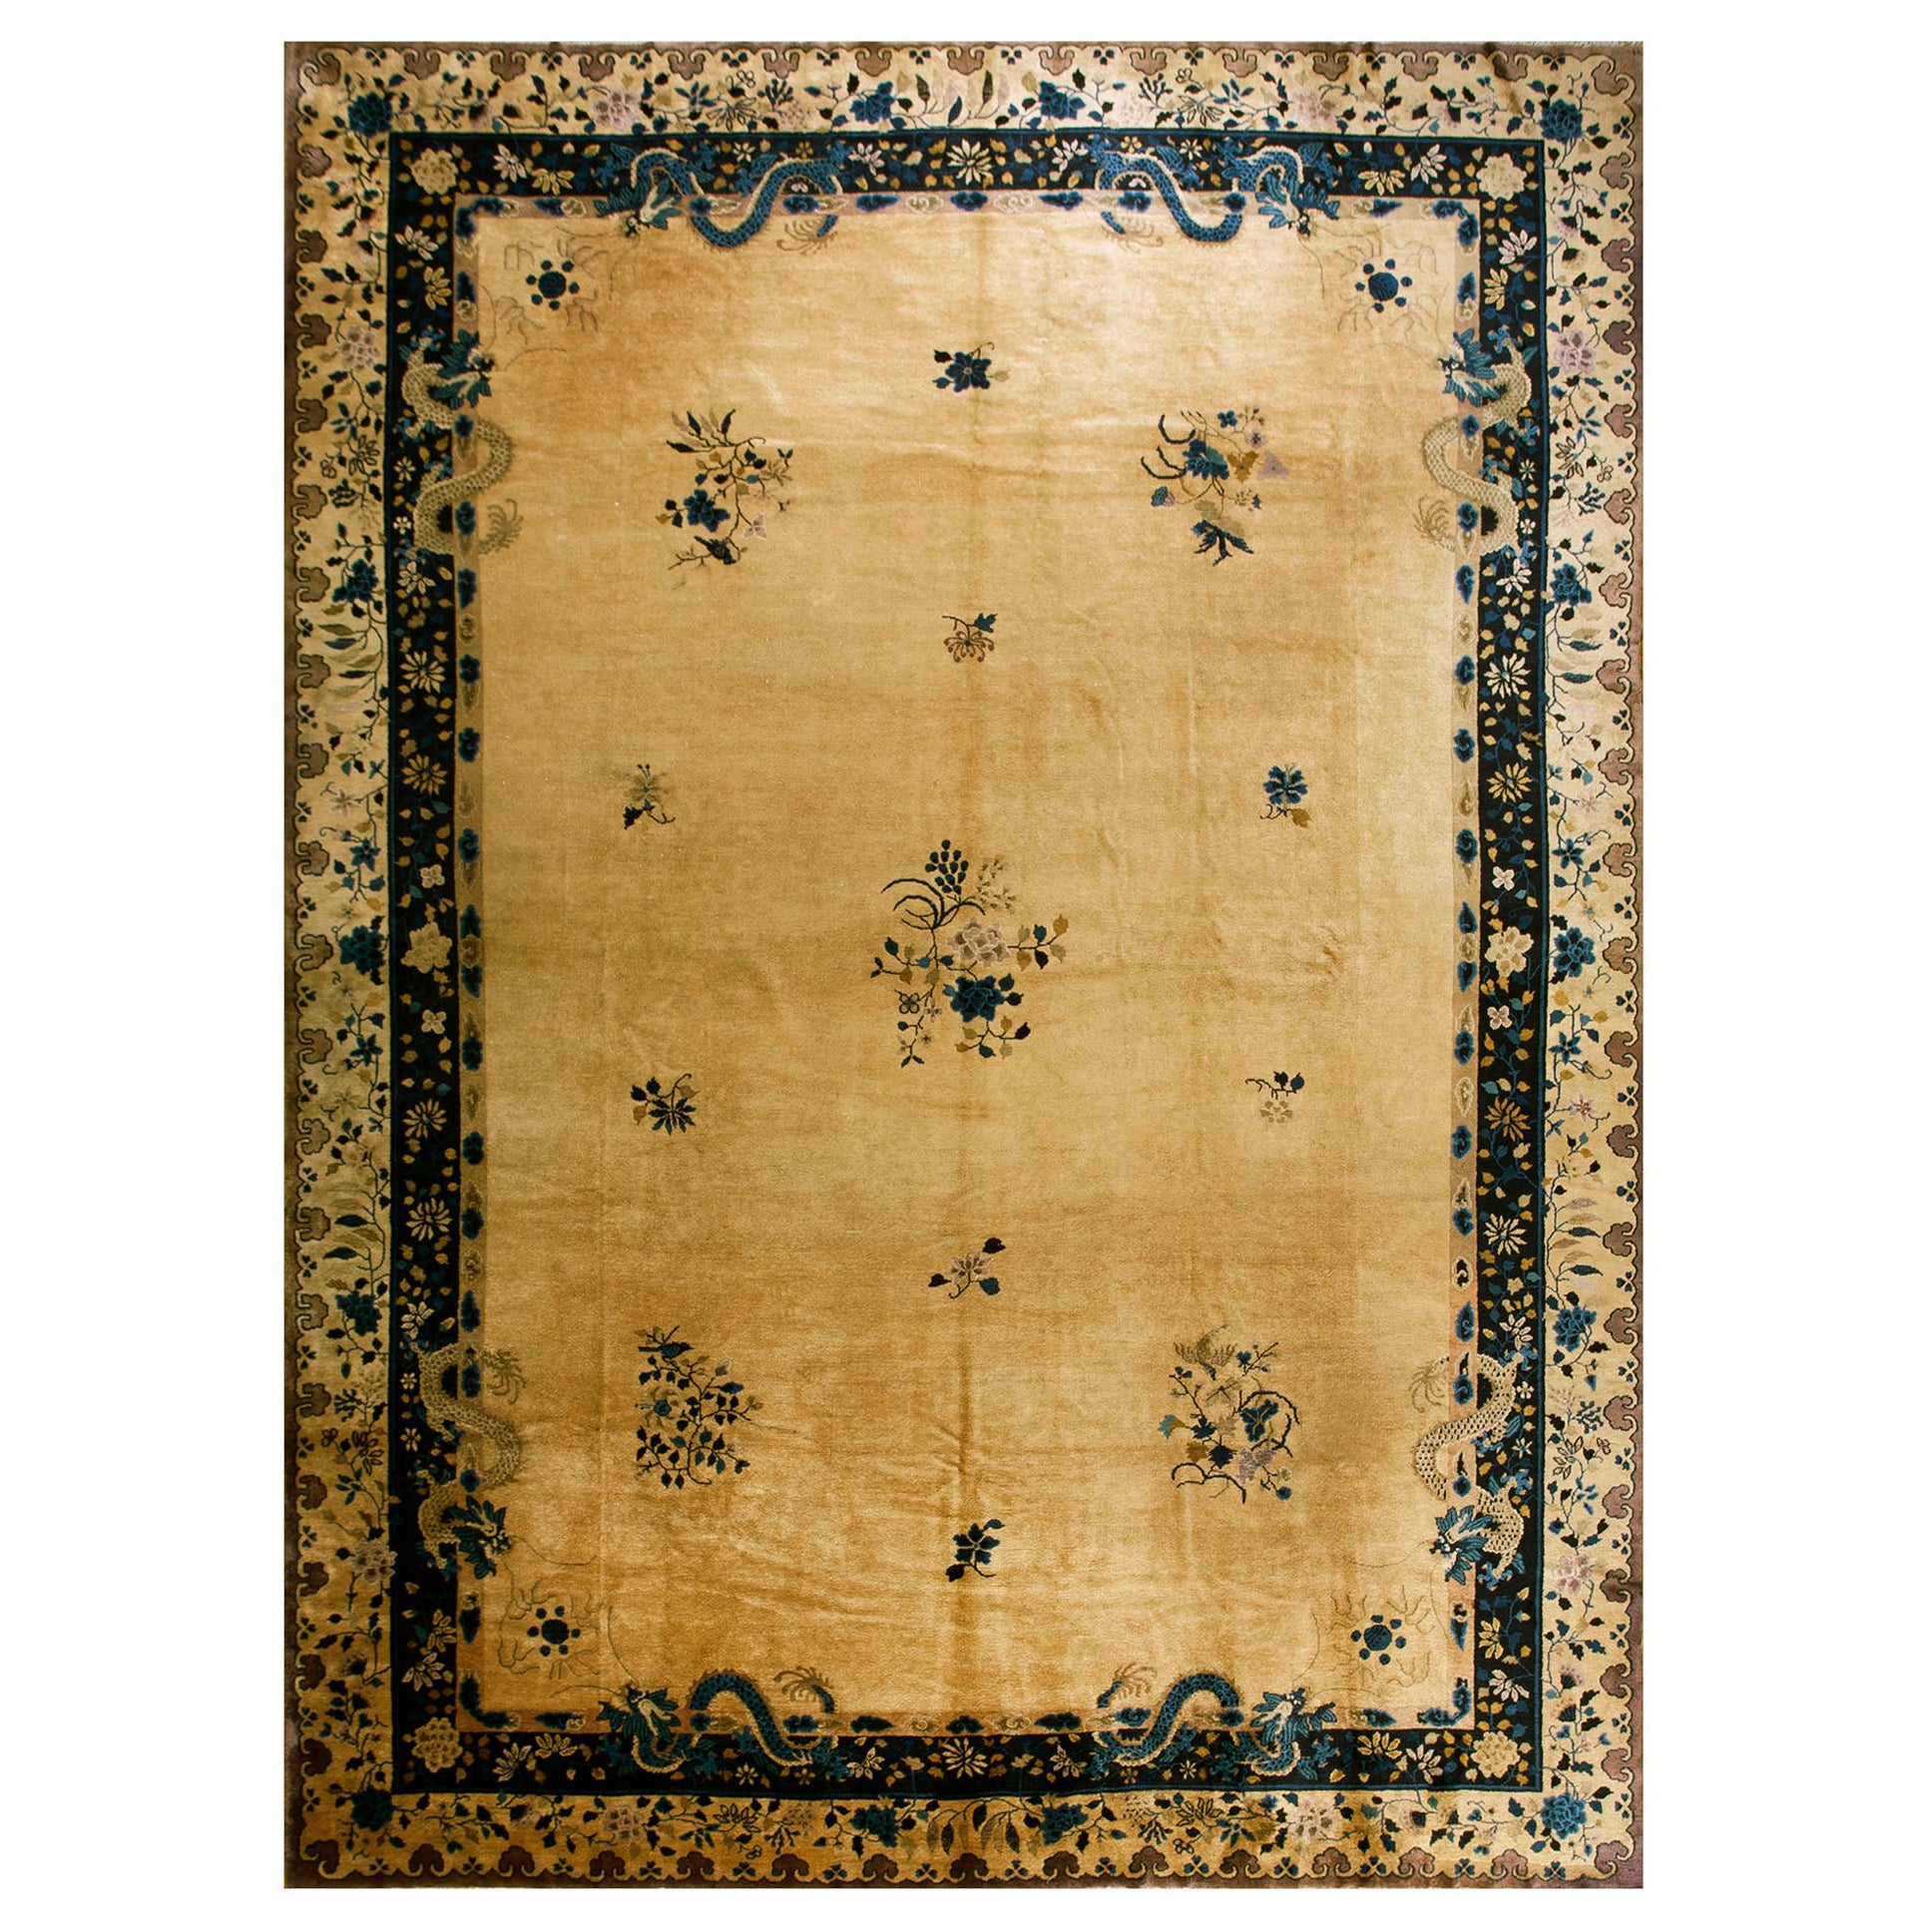 Early 20th Century Chinese Peking Dragon Carpet ( 11'4''x 15'6'' - 345 x 472 )